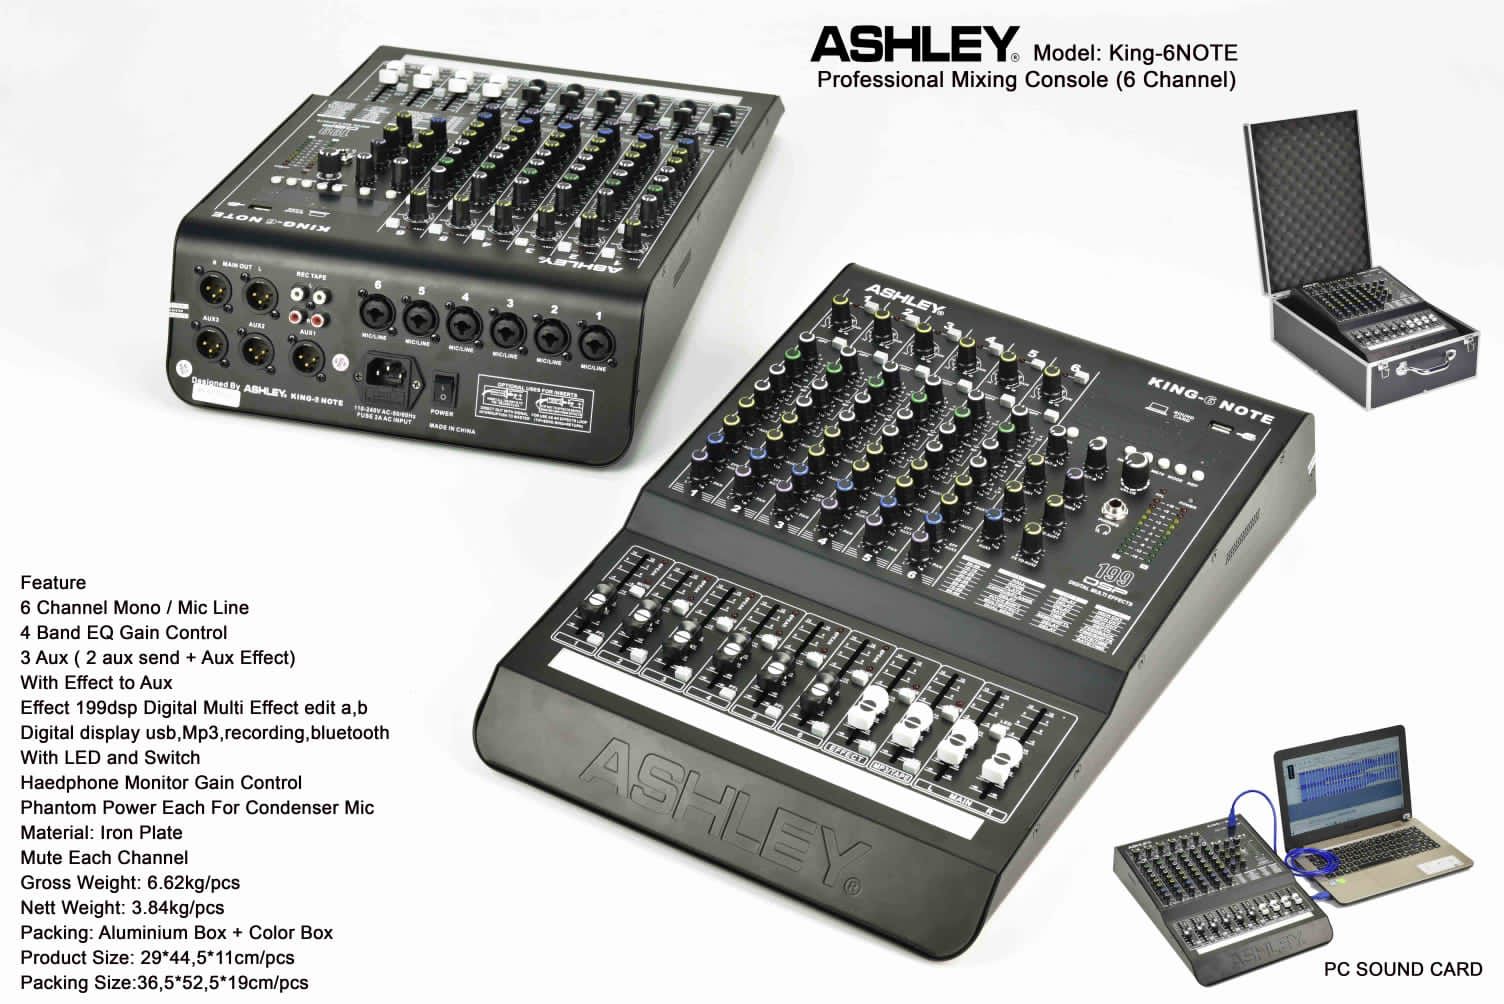 Harga mixer ashley 6 channel